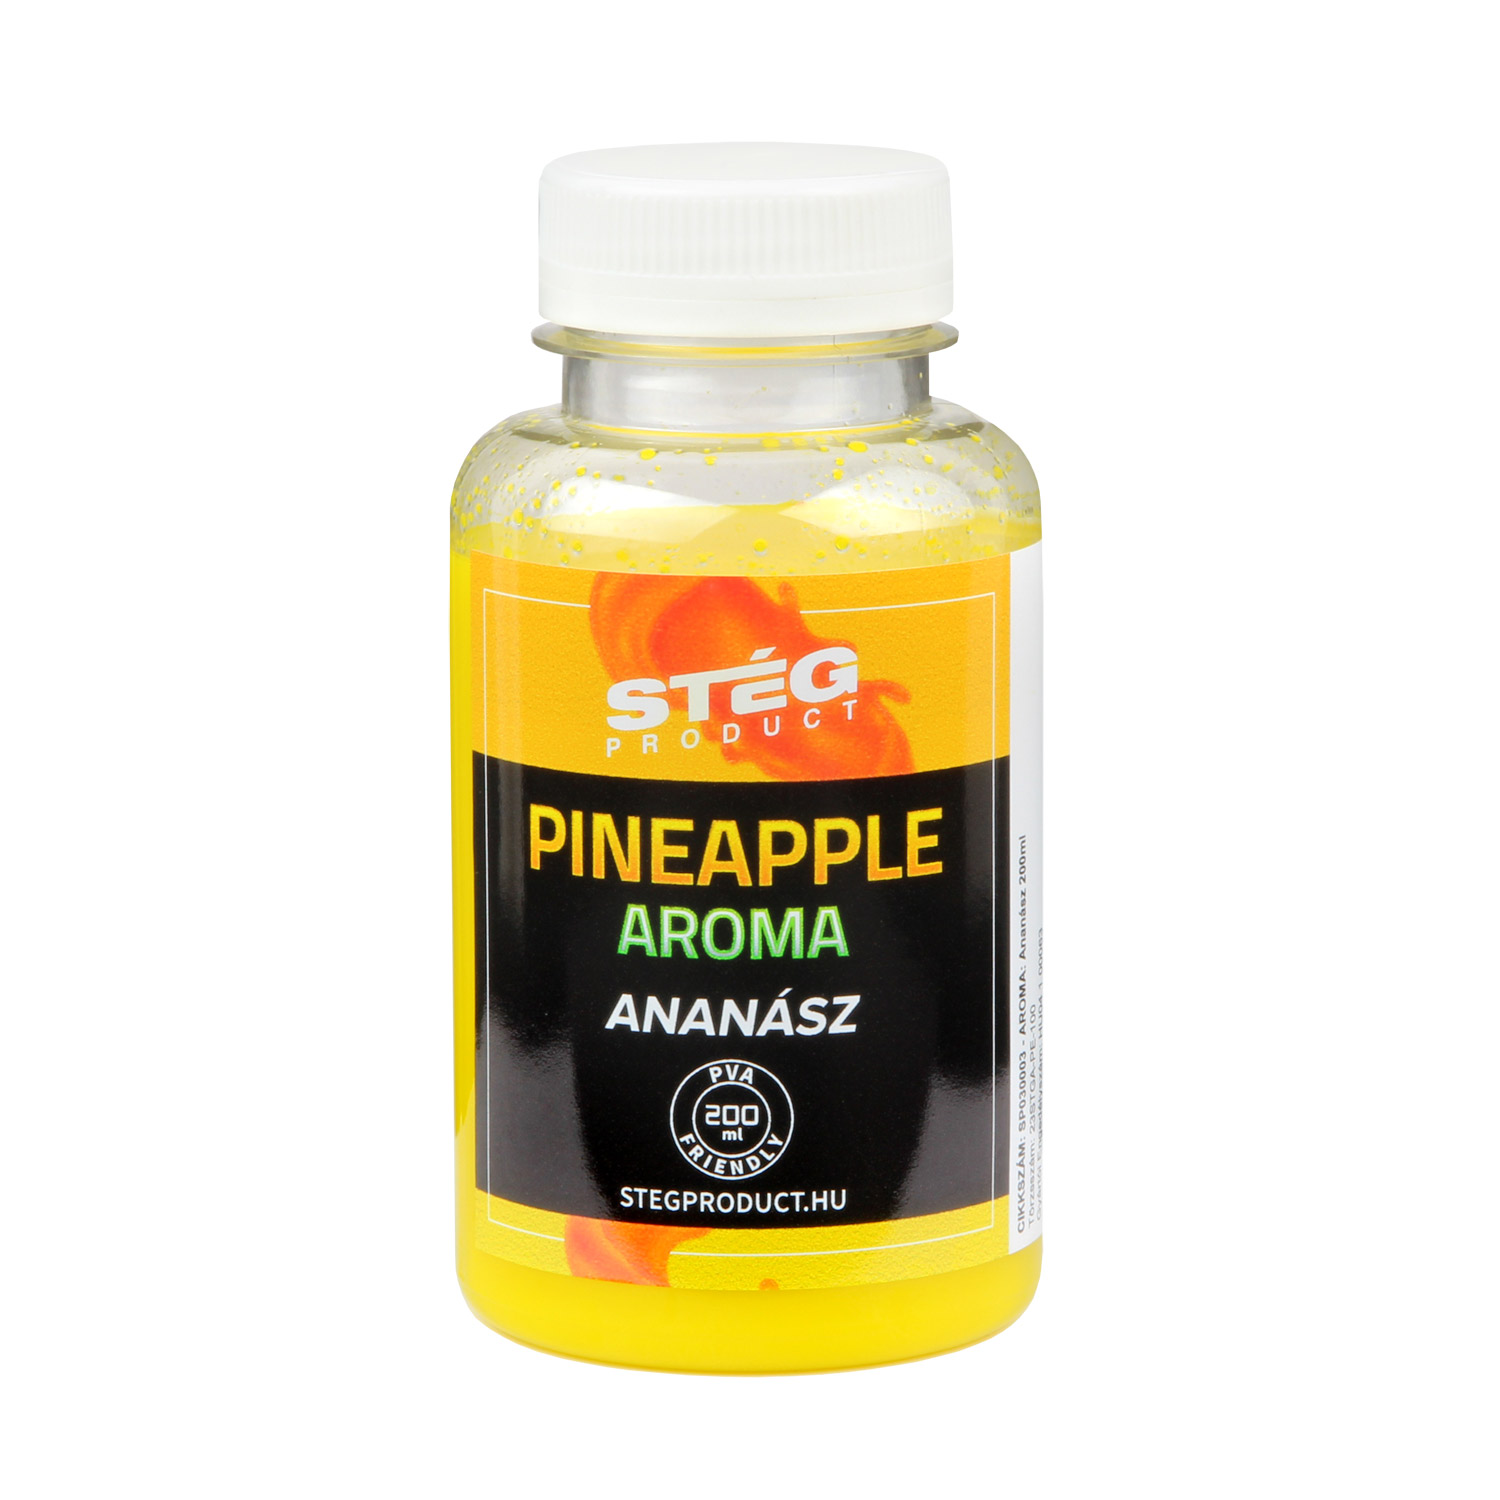 Stg Aroma Pineapple 200ml